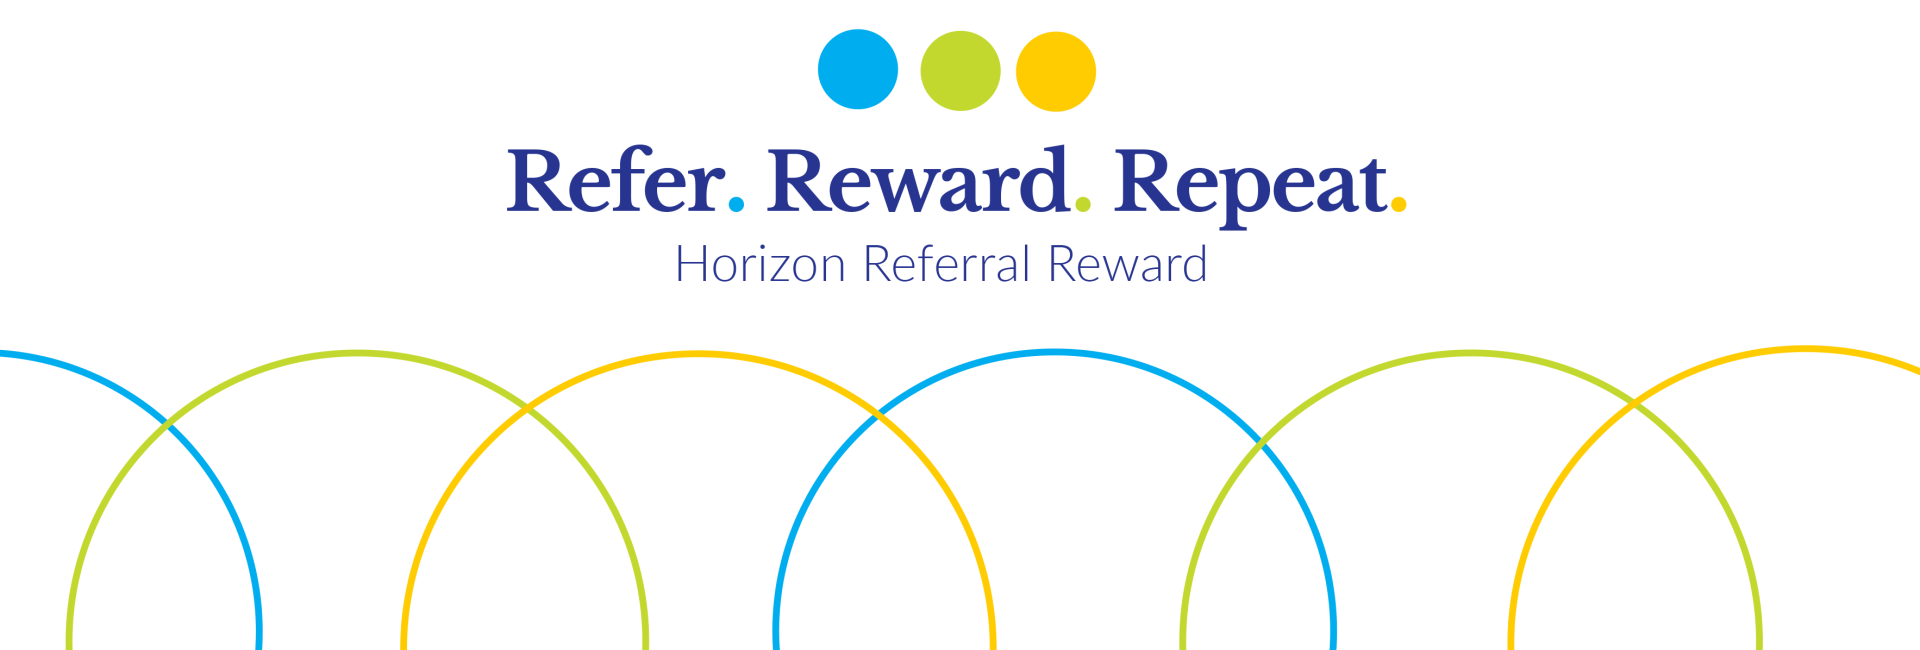 Horizon Referral Reward: 